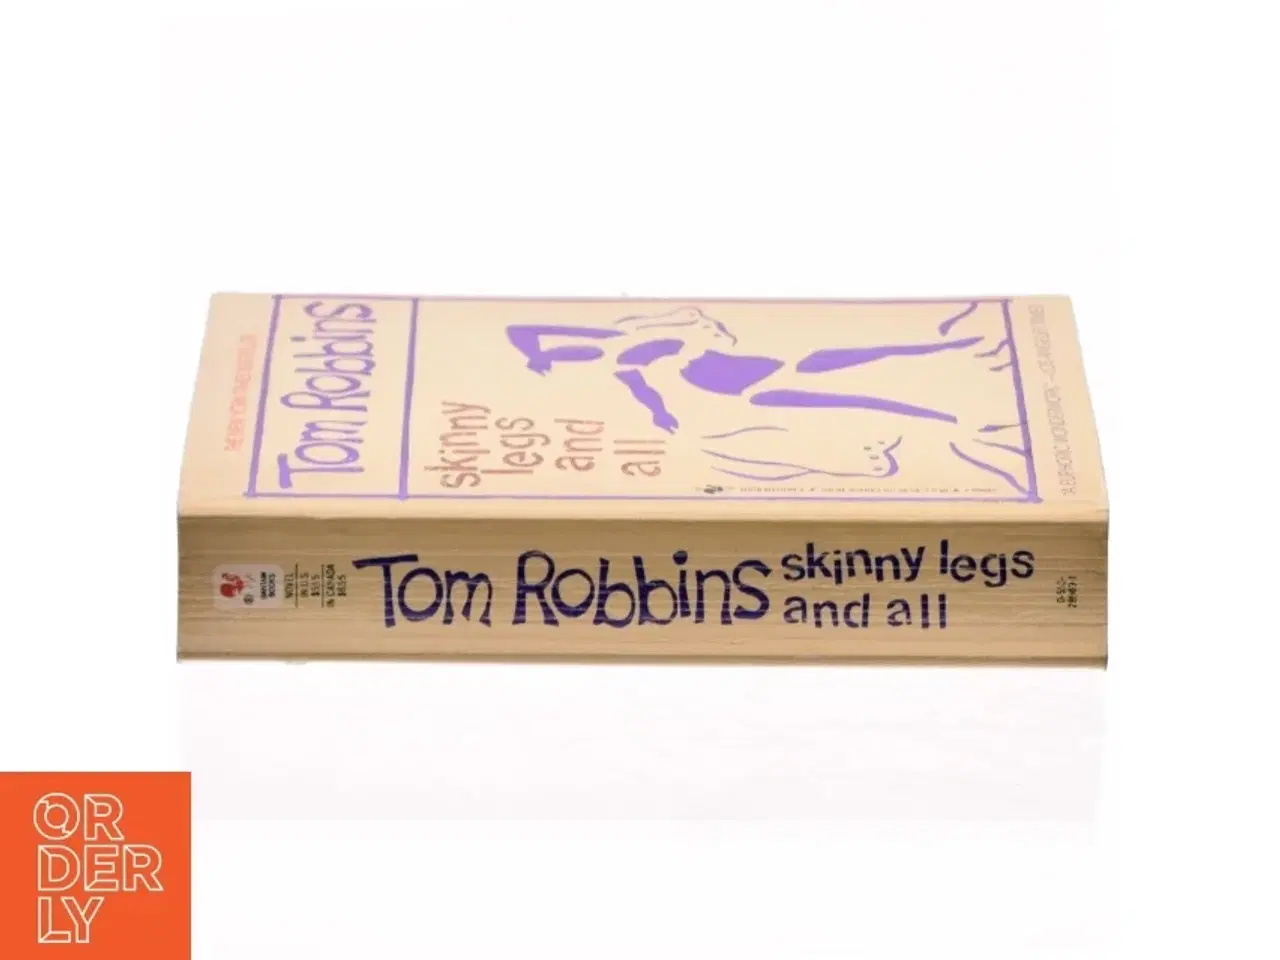 Billede 2 - Skinny legs and all by Tom Robbins